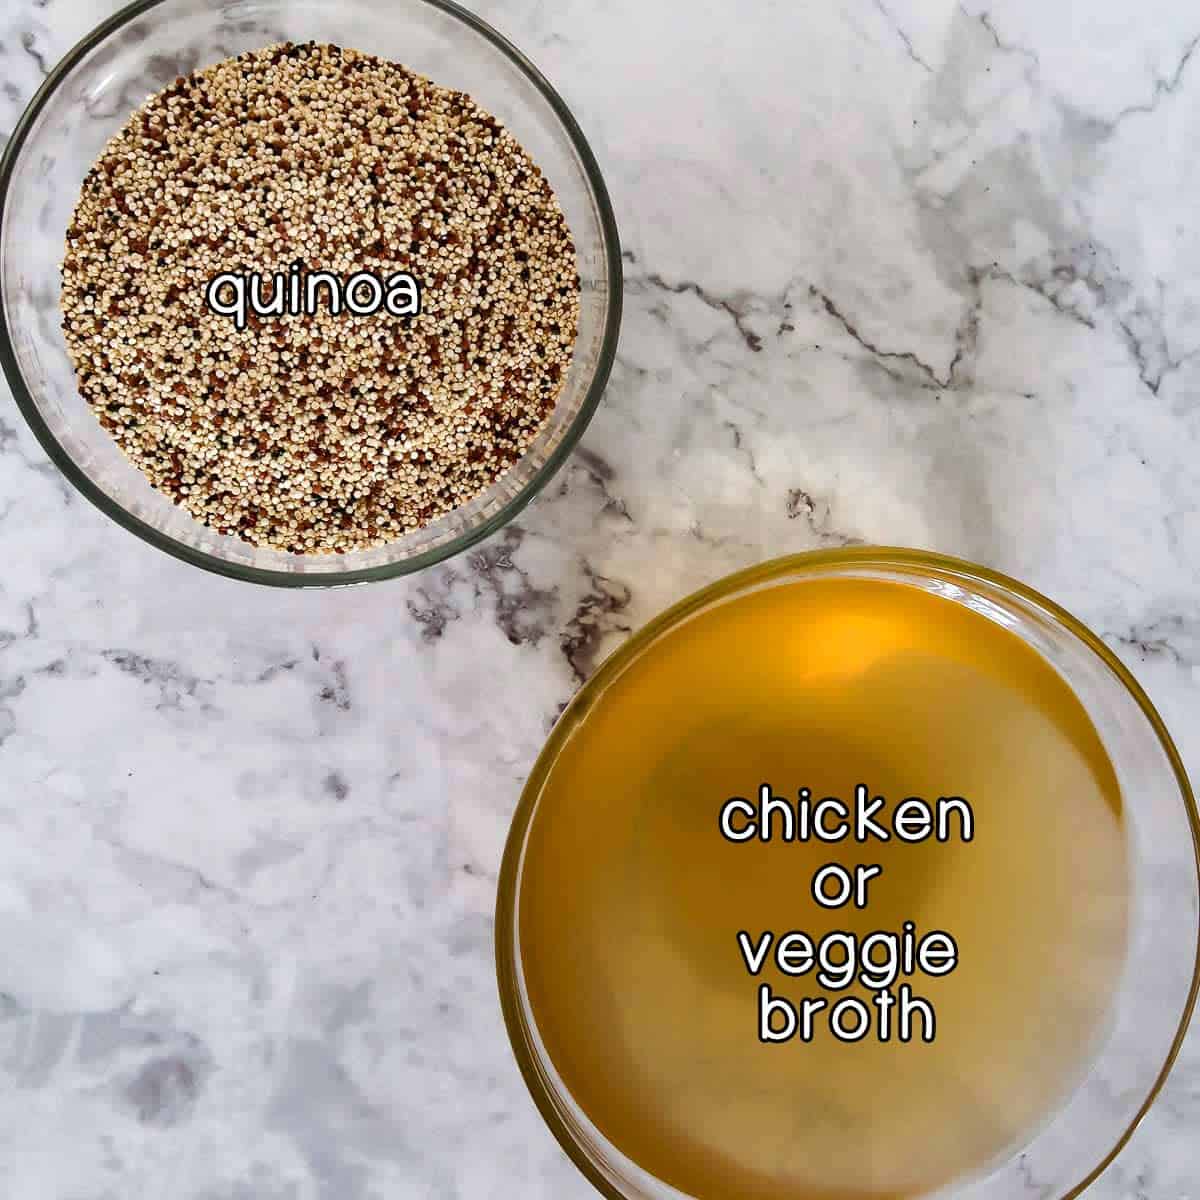 Overhead shot of ingredients - quinoa and chicken/veggie broth.